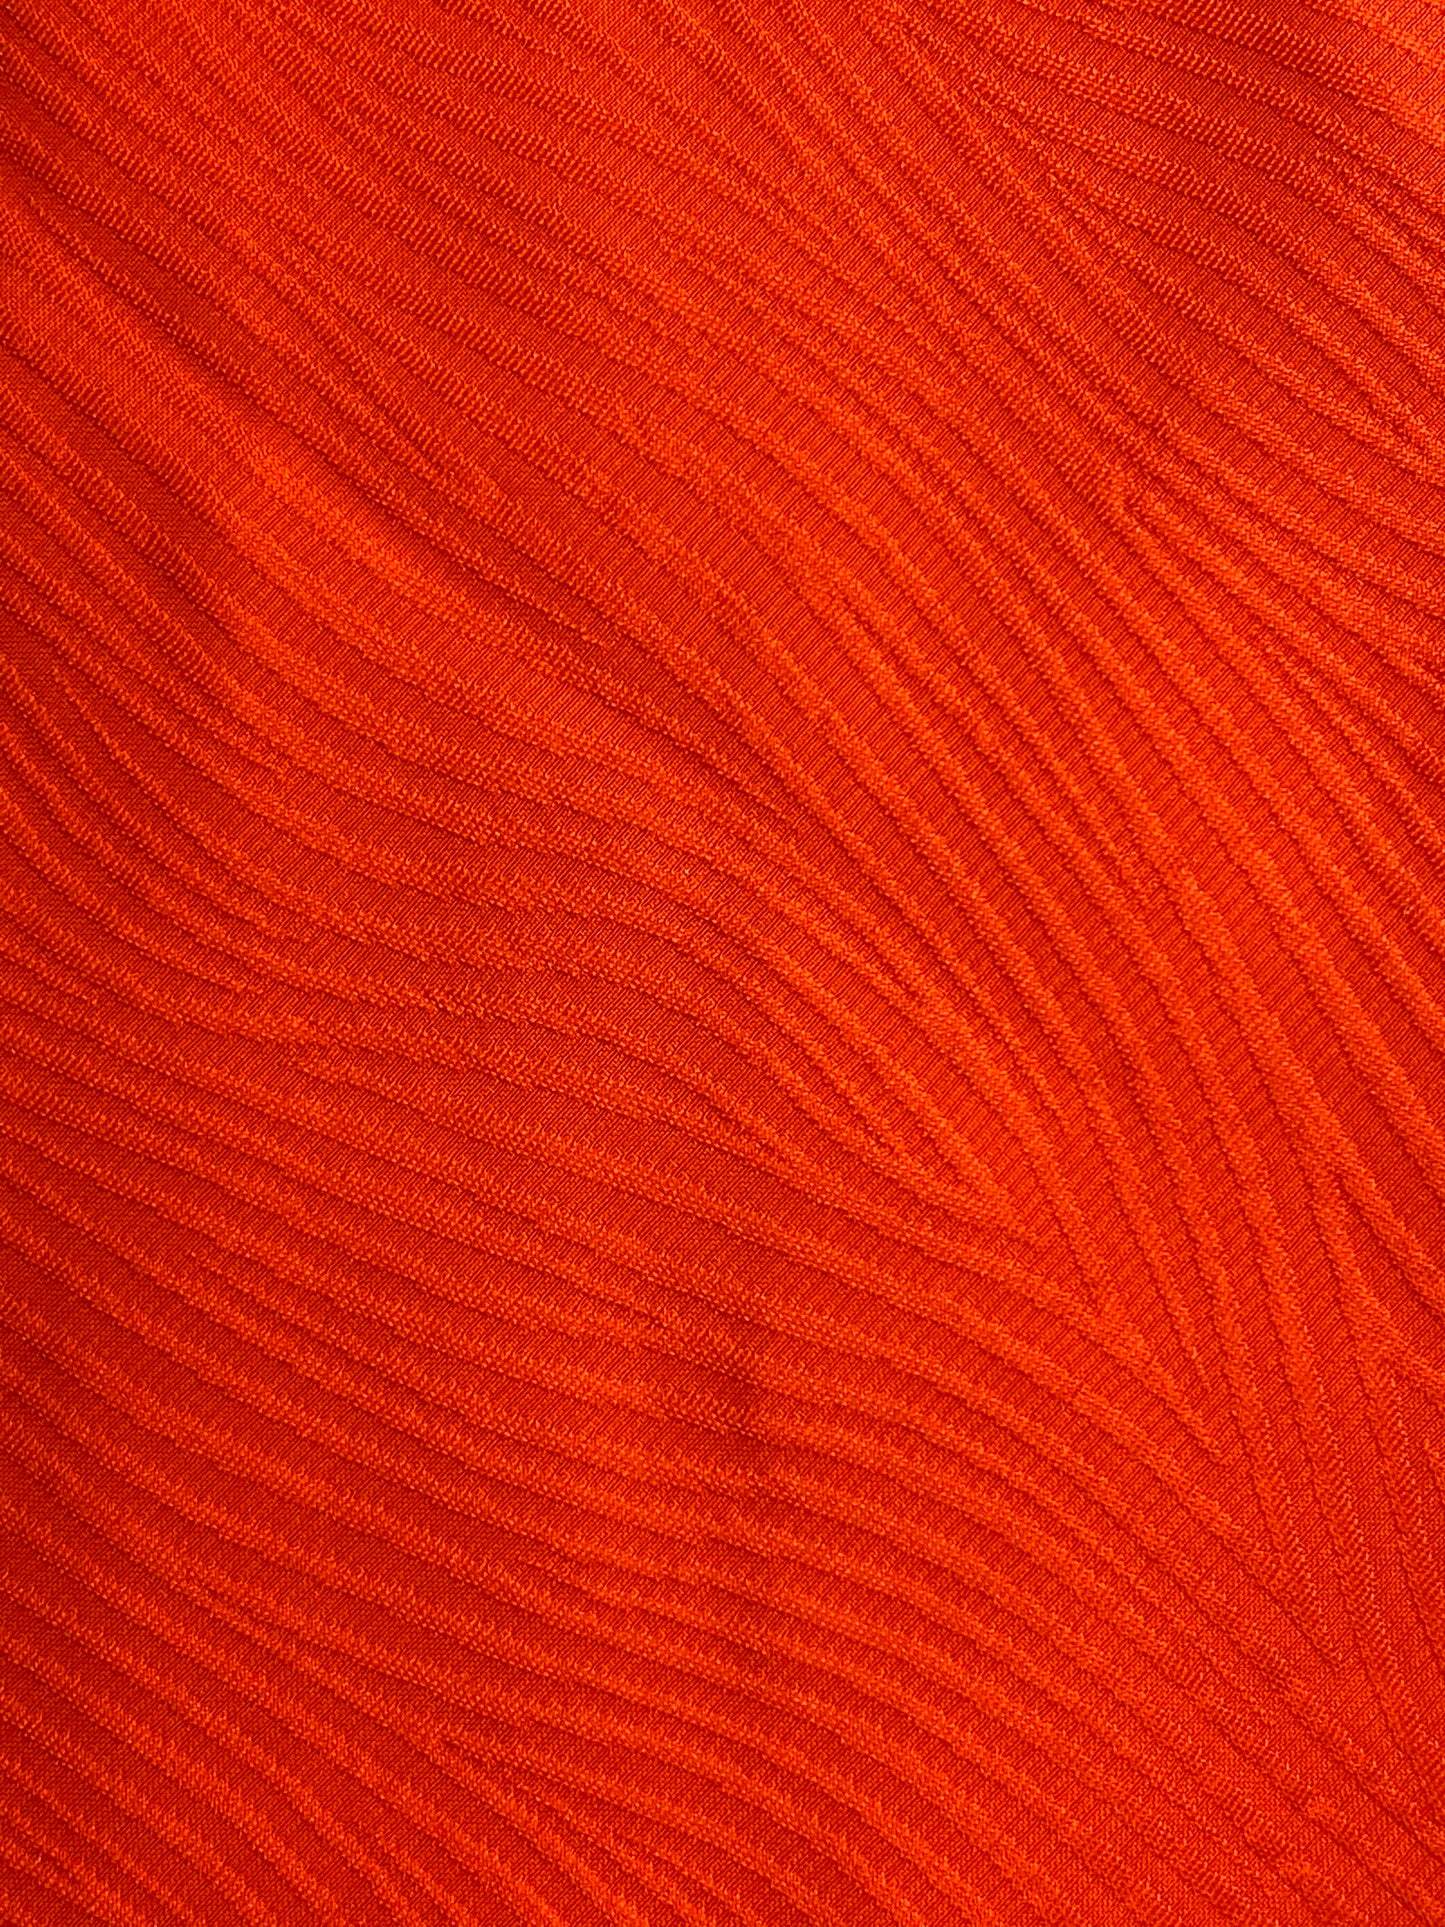 Close-up detail of: 90s Deadstock Silk Necktie, Men's Vintage Solid Orange Textured Tie, NOS